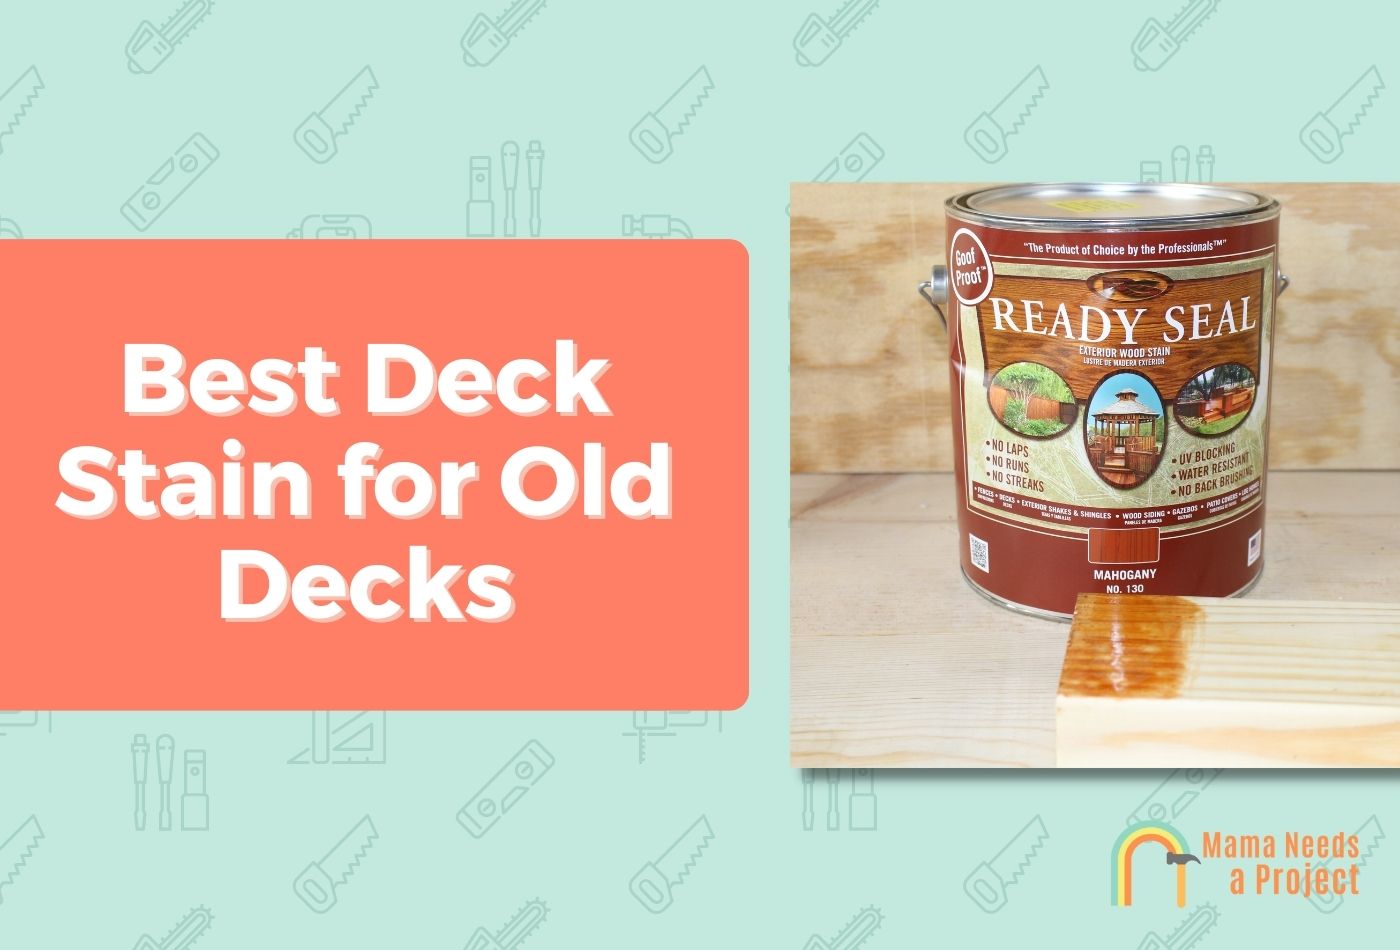 Best Deck Stain for Old Decks